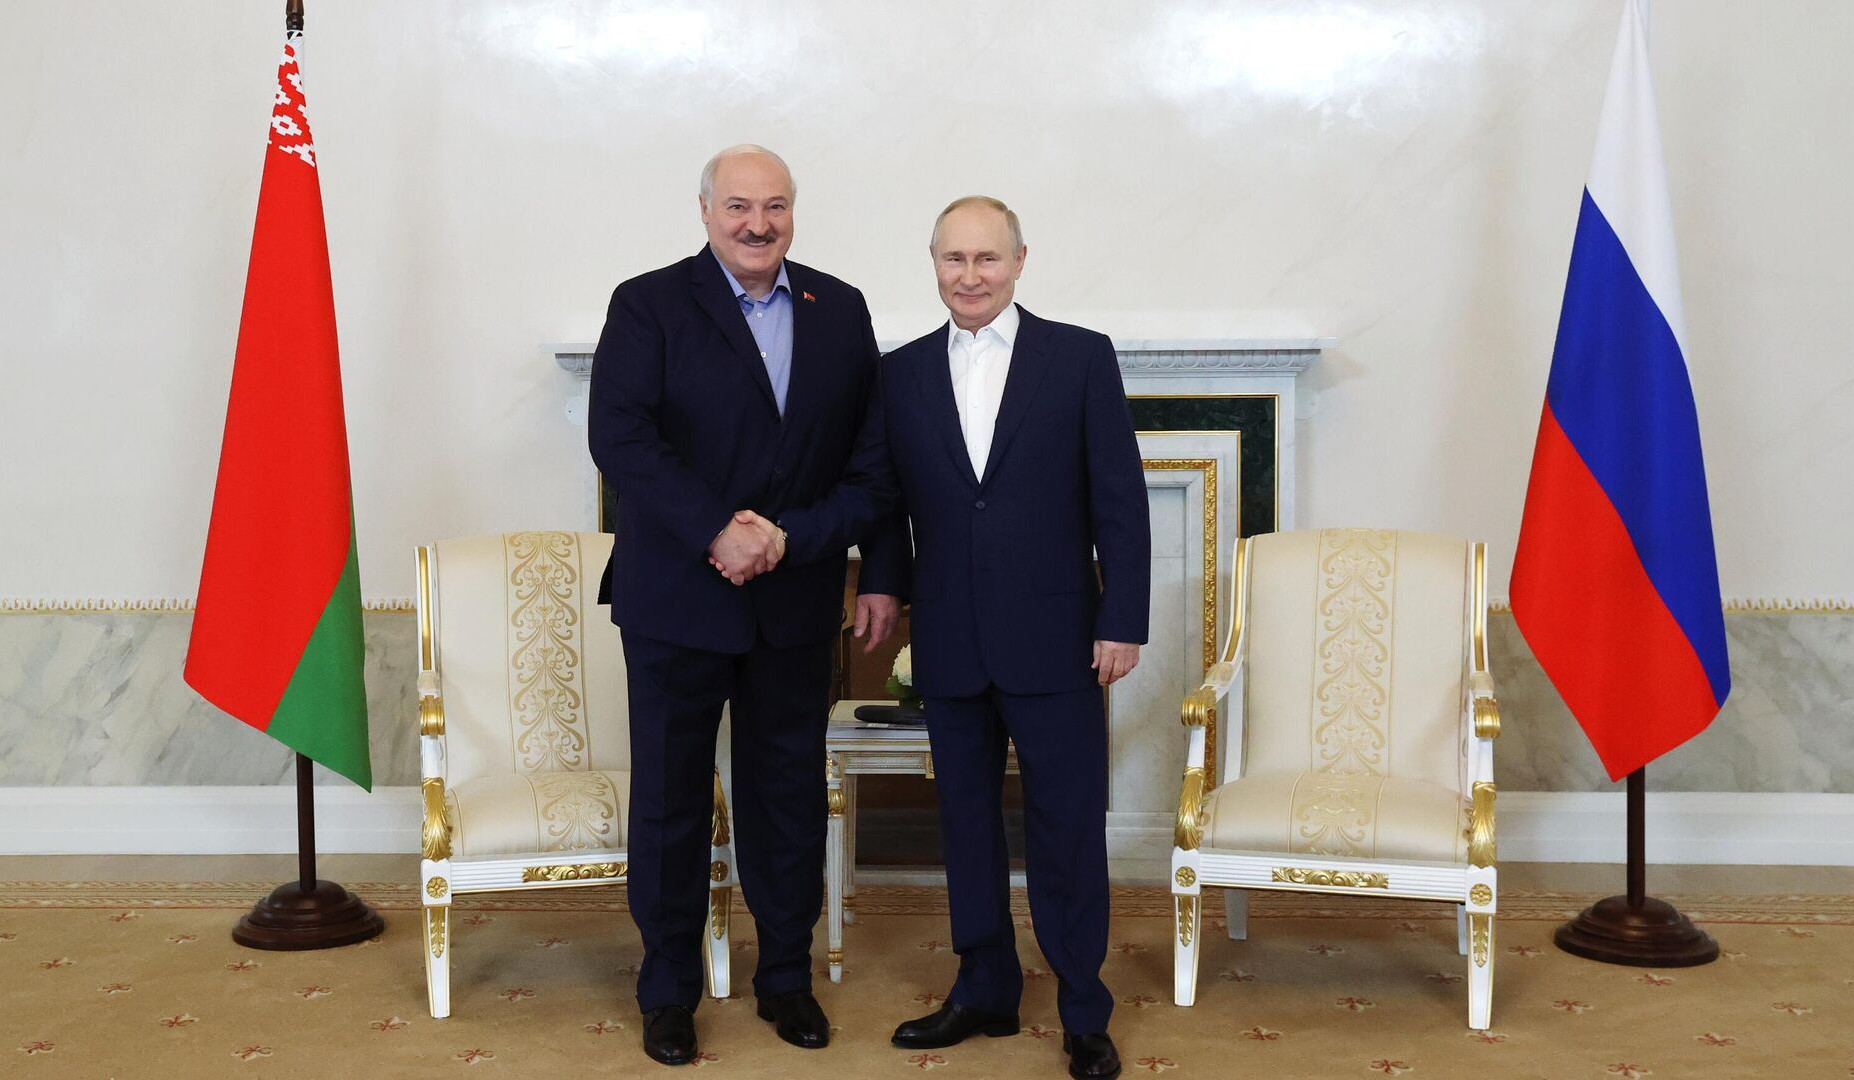 Putin congratulated Lukashenko on his 30-year tenure